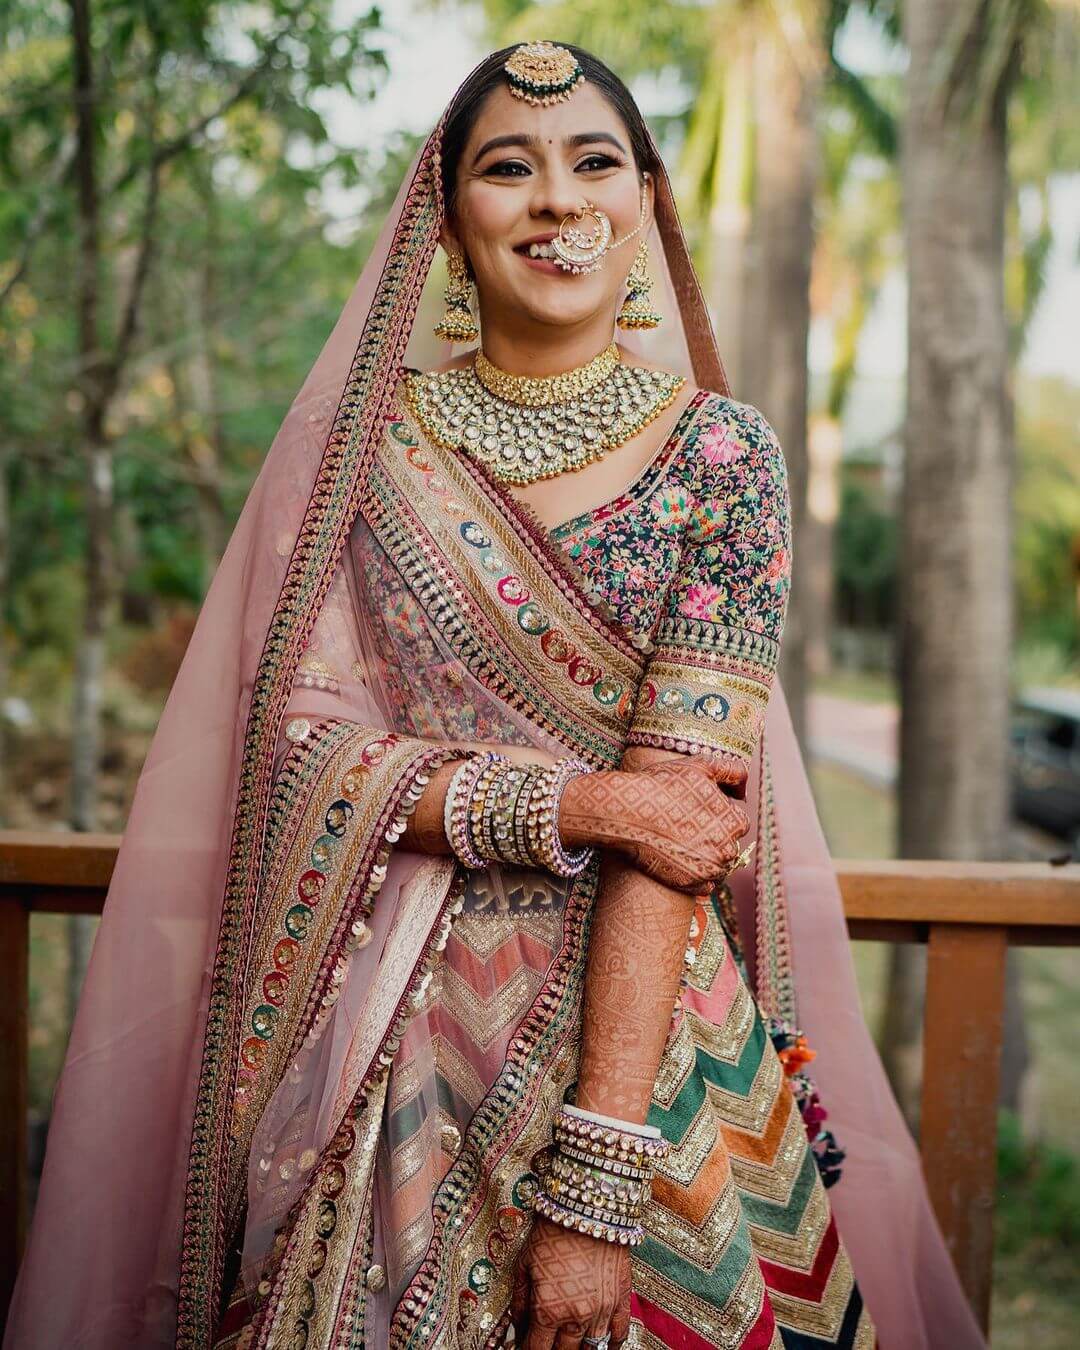 That Multicolored Unique Bridal Lehenga  Stunning Sabyasachi Lehengas Spotted On Real Brides